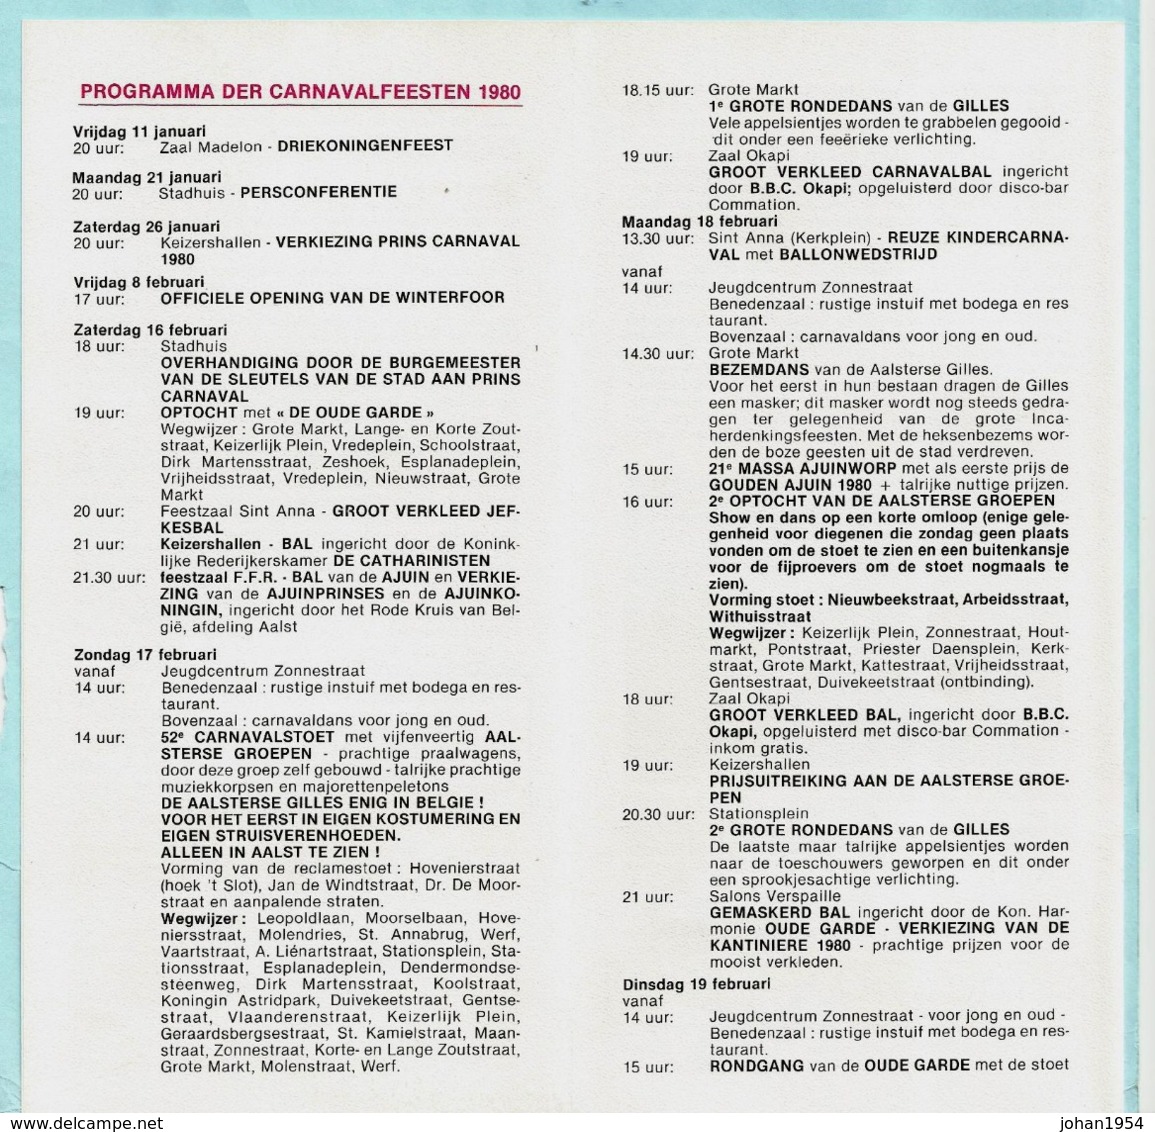 AALST - CARNAVAL 1977/1979/1980 (programma) + aftelkalender Carnaval 1997 + Carnavalstoet 1979 (deelnemerslijst)